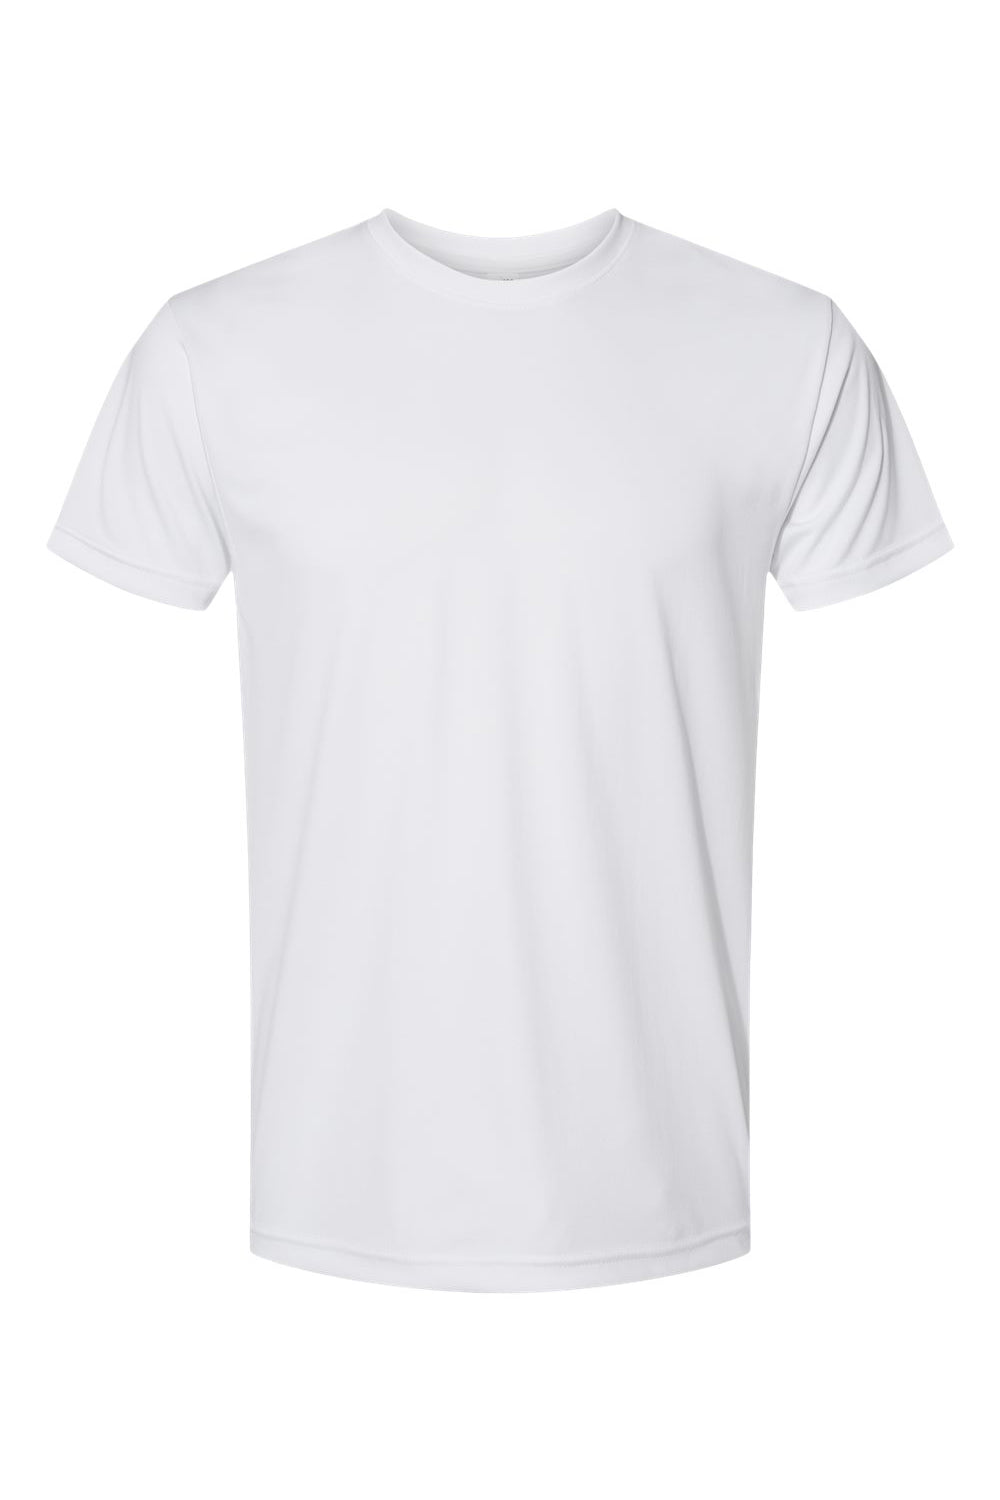 Bayside 5300 Mens USA Made Performance Short Sleeve Crewneck T-Shirt White Flat Front